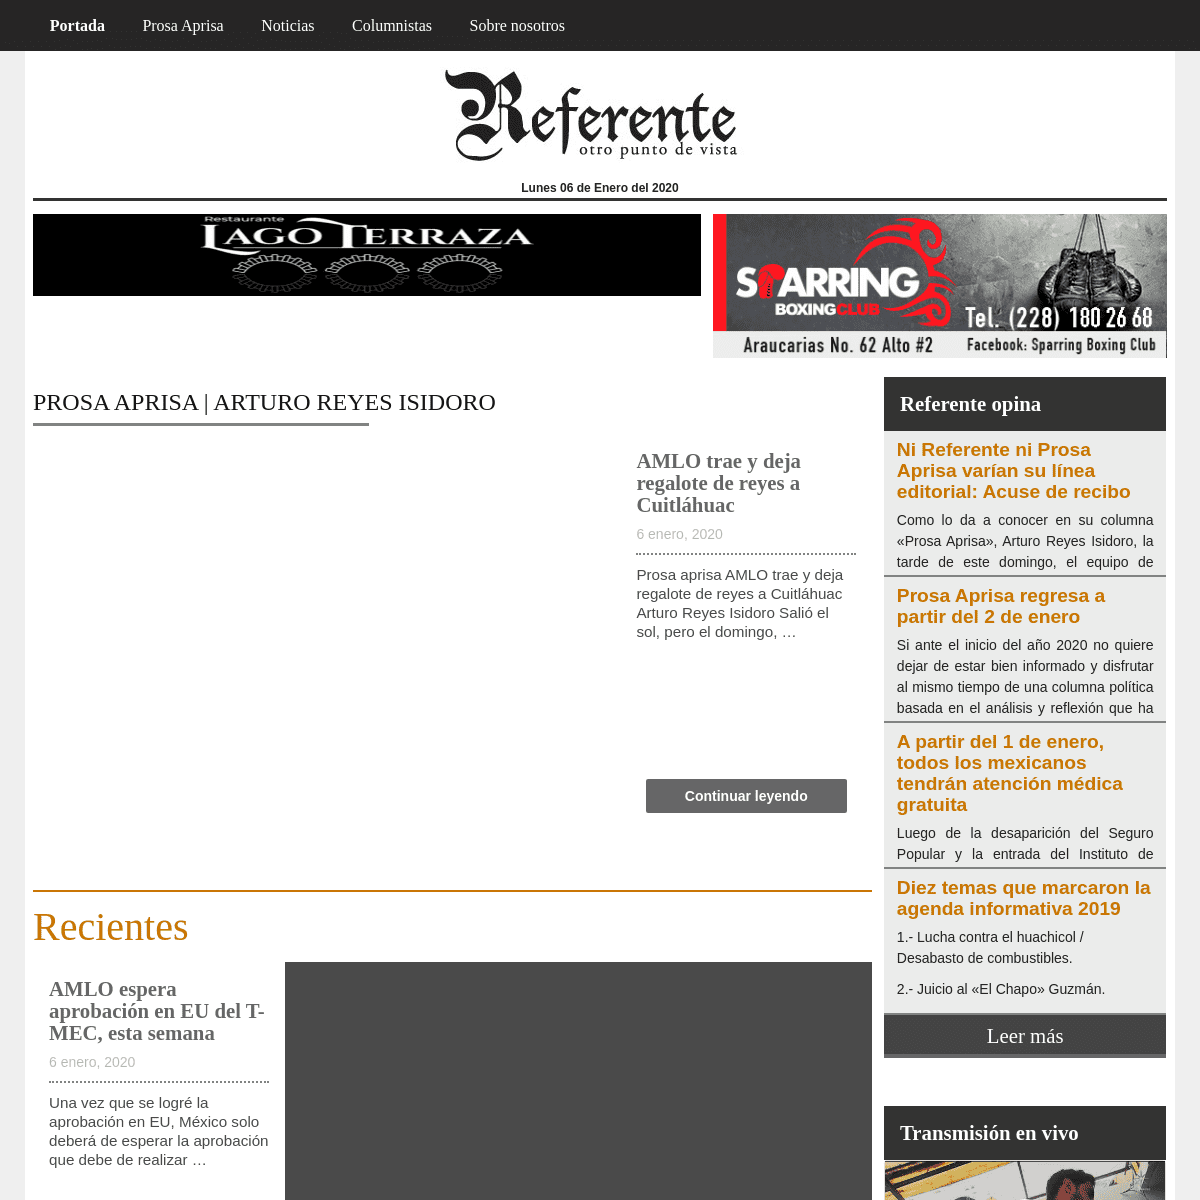 A complete backup of referente.com.mx